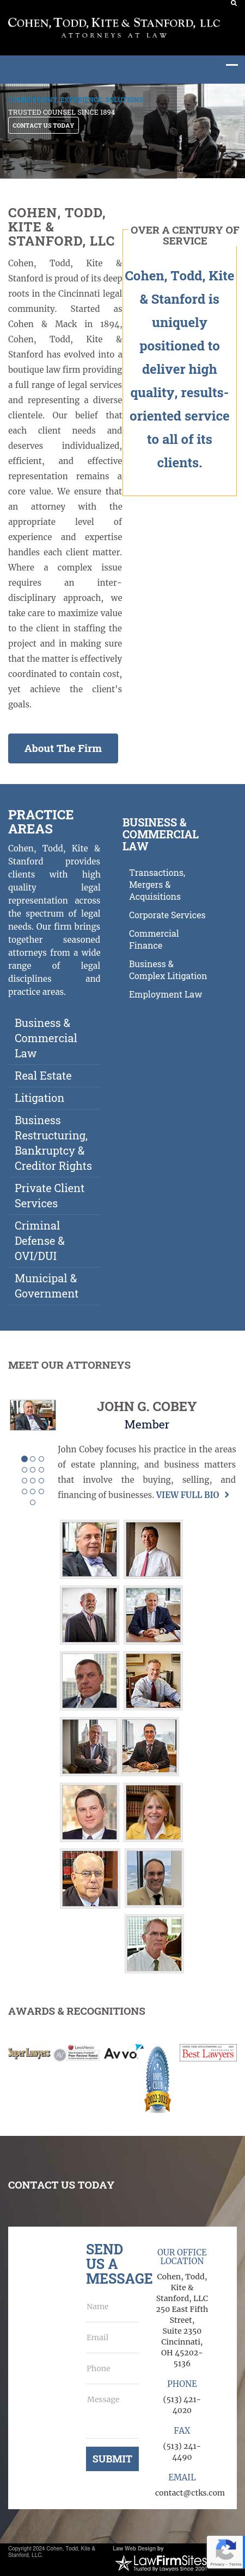 Cohen, Todd, Kite & Stanford, LLC - Cincinnati OH Lawyers